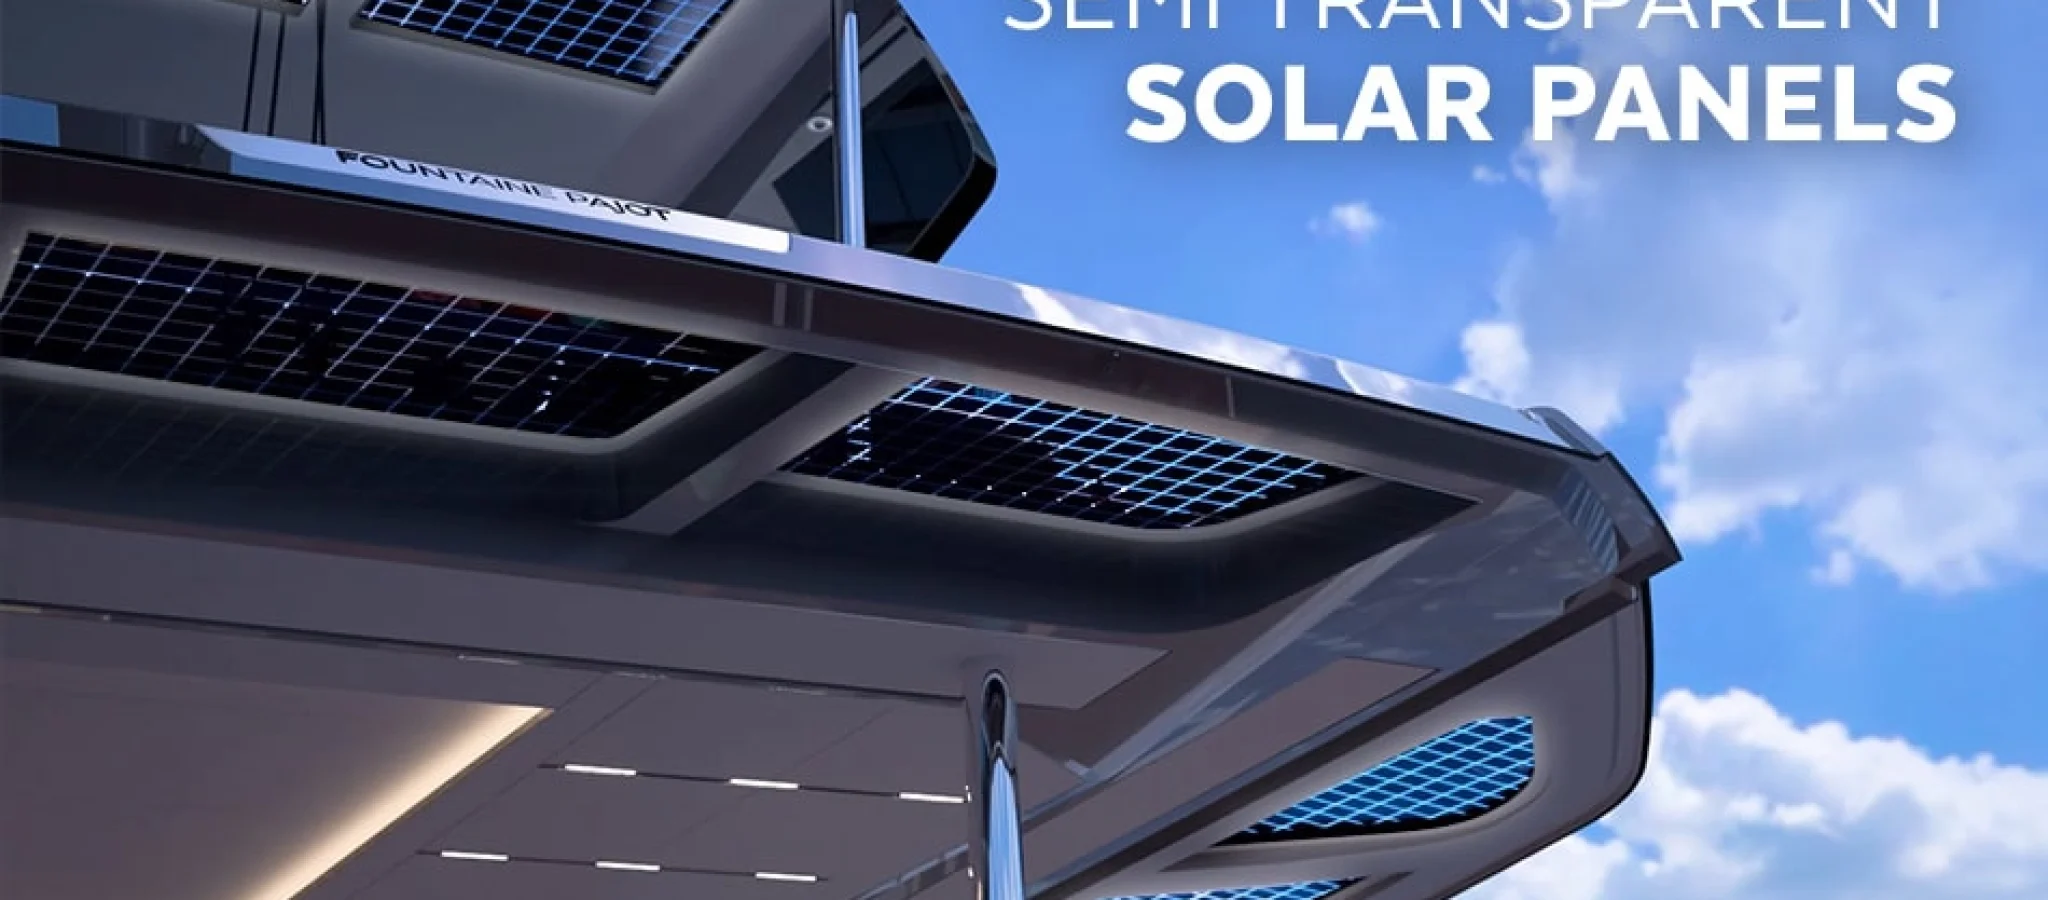 new-80-img-12-semi-transparant-solar-panels-min.jpg